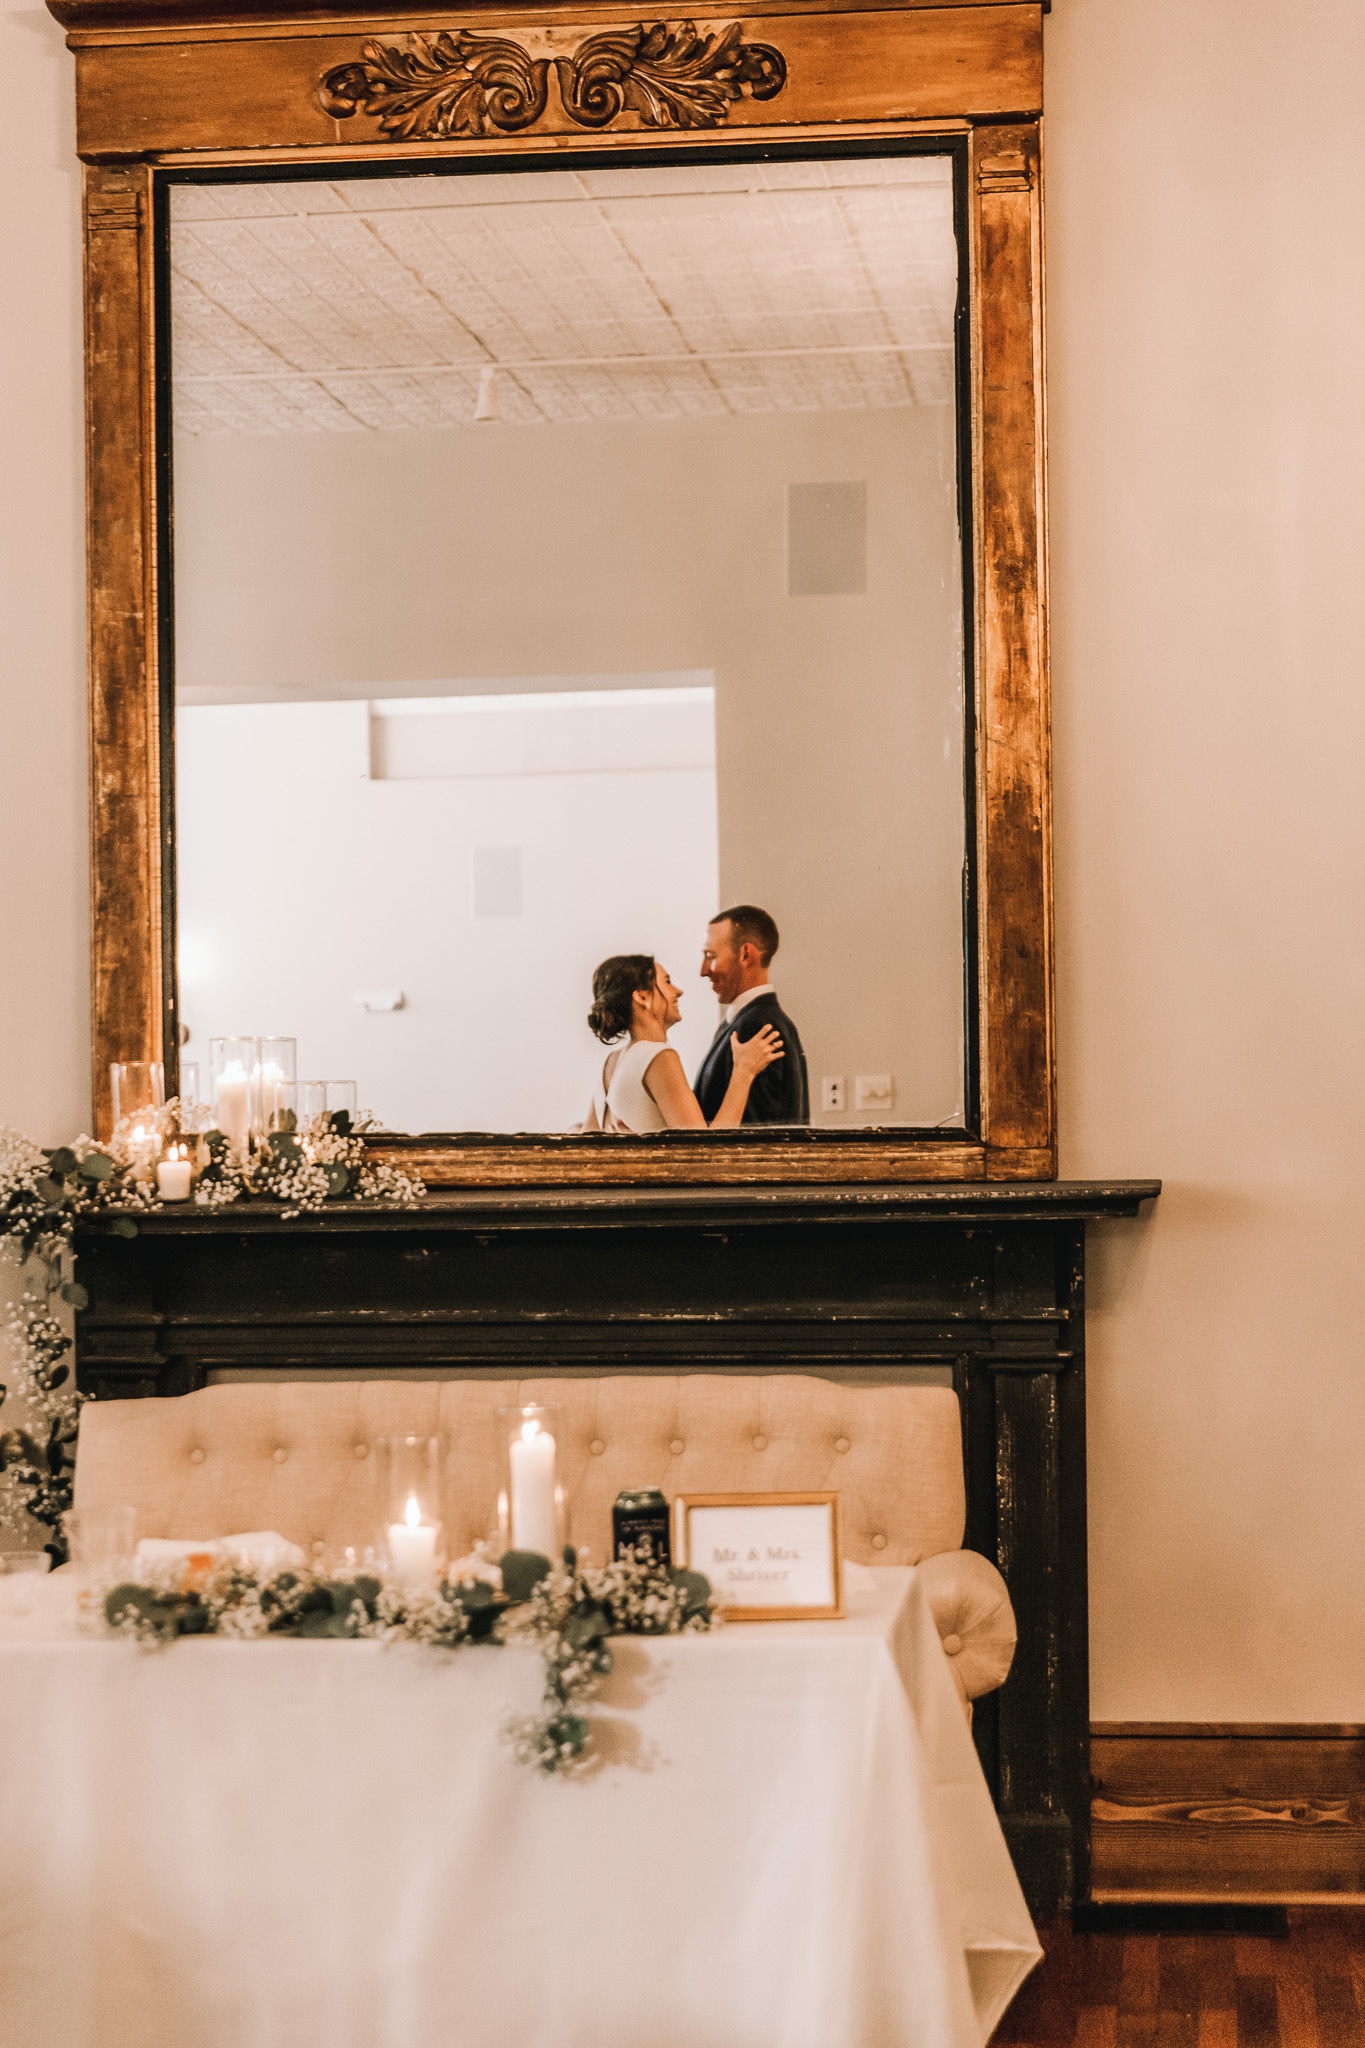 Bride and groom's reflection in mirror at Kansas wedding venue.